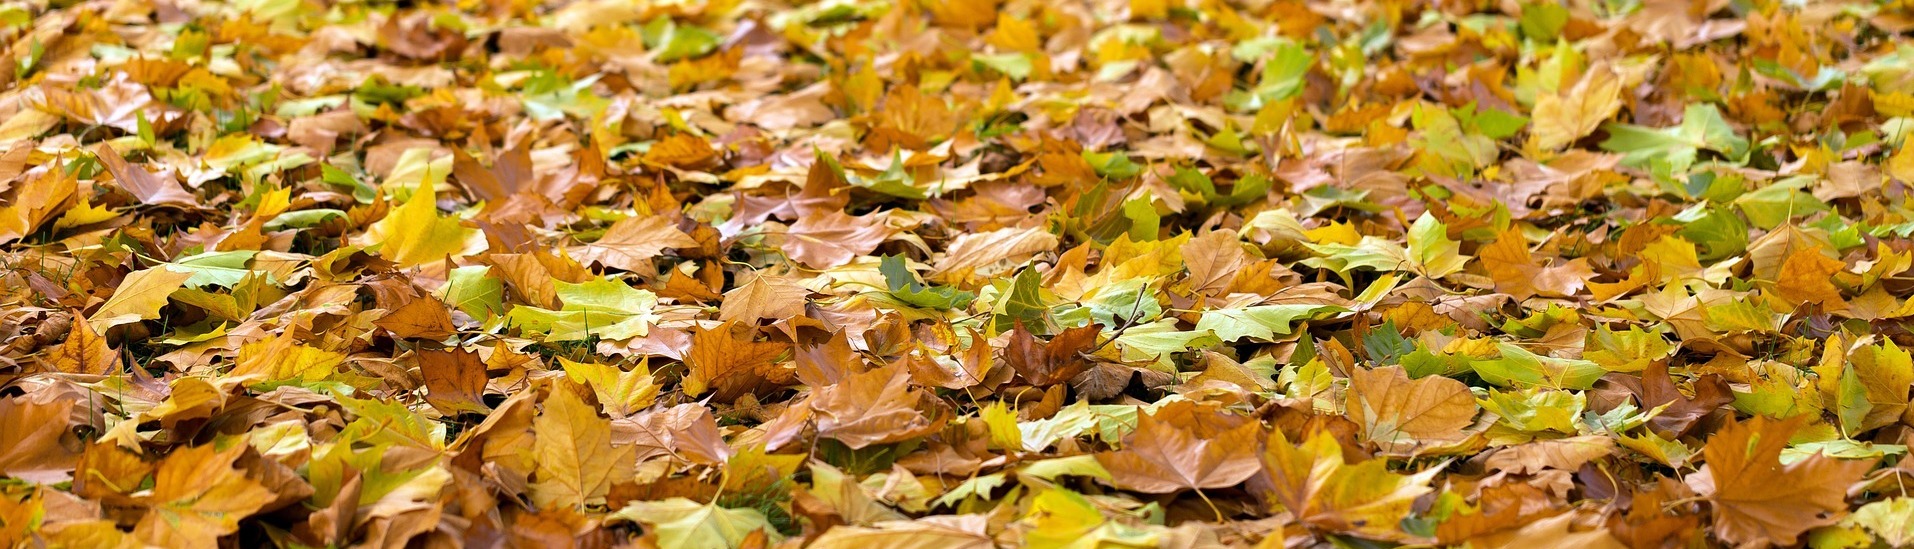 Herbstferien (c) © CC0 - pixabay.com